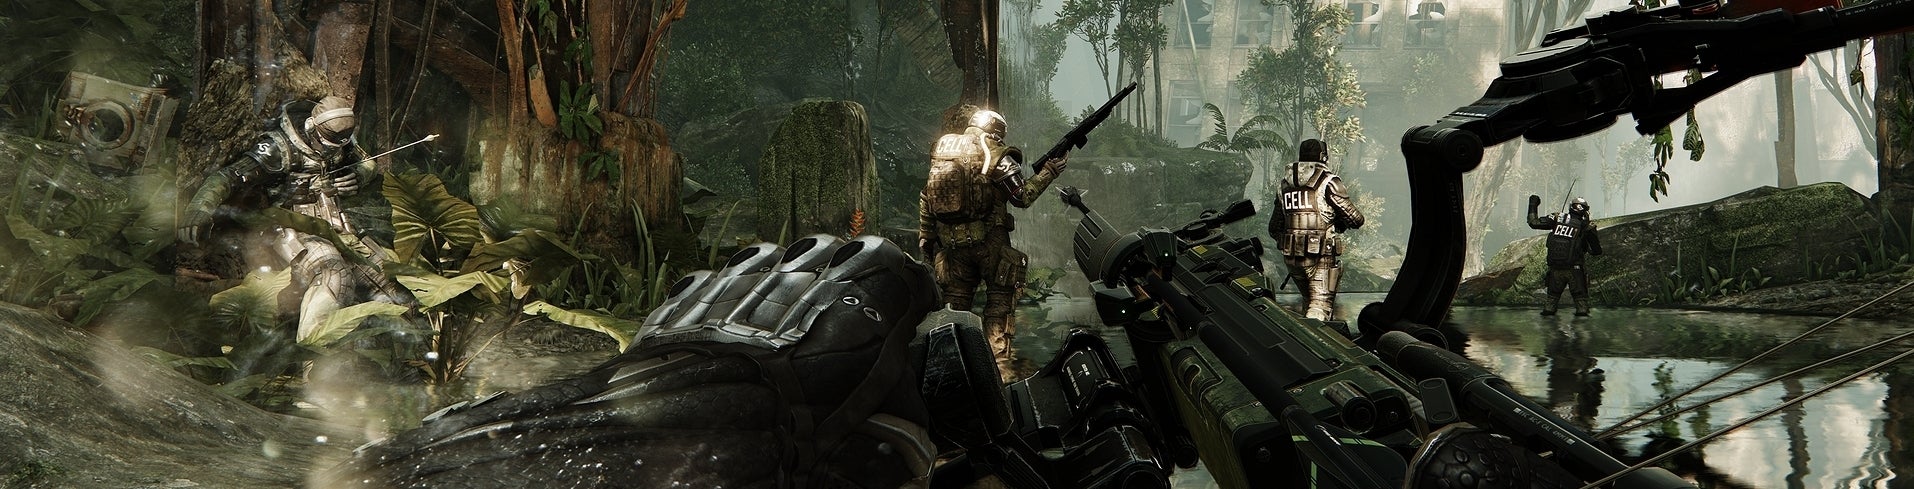 Image for Demo showdown: Crysis 3 multiplayer beta